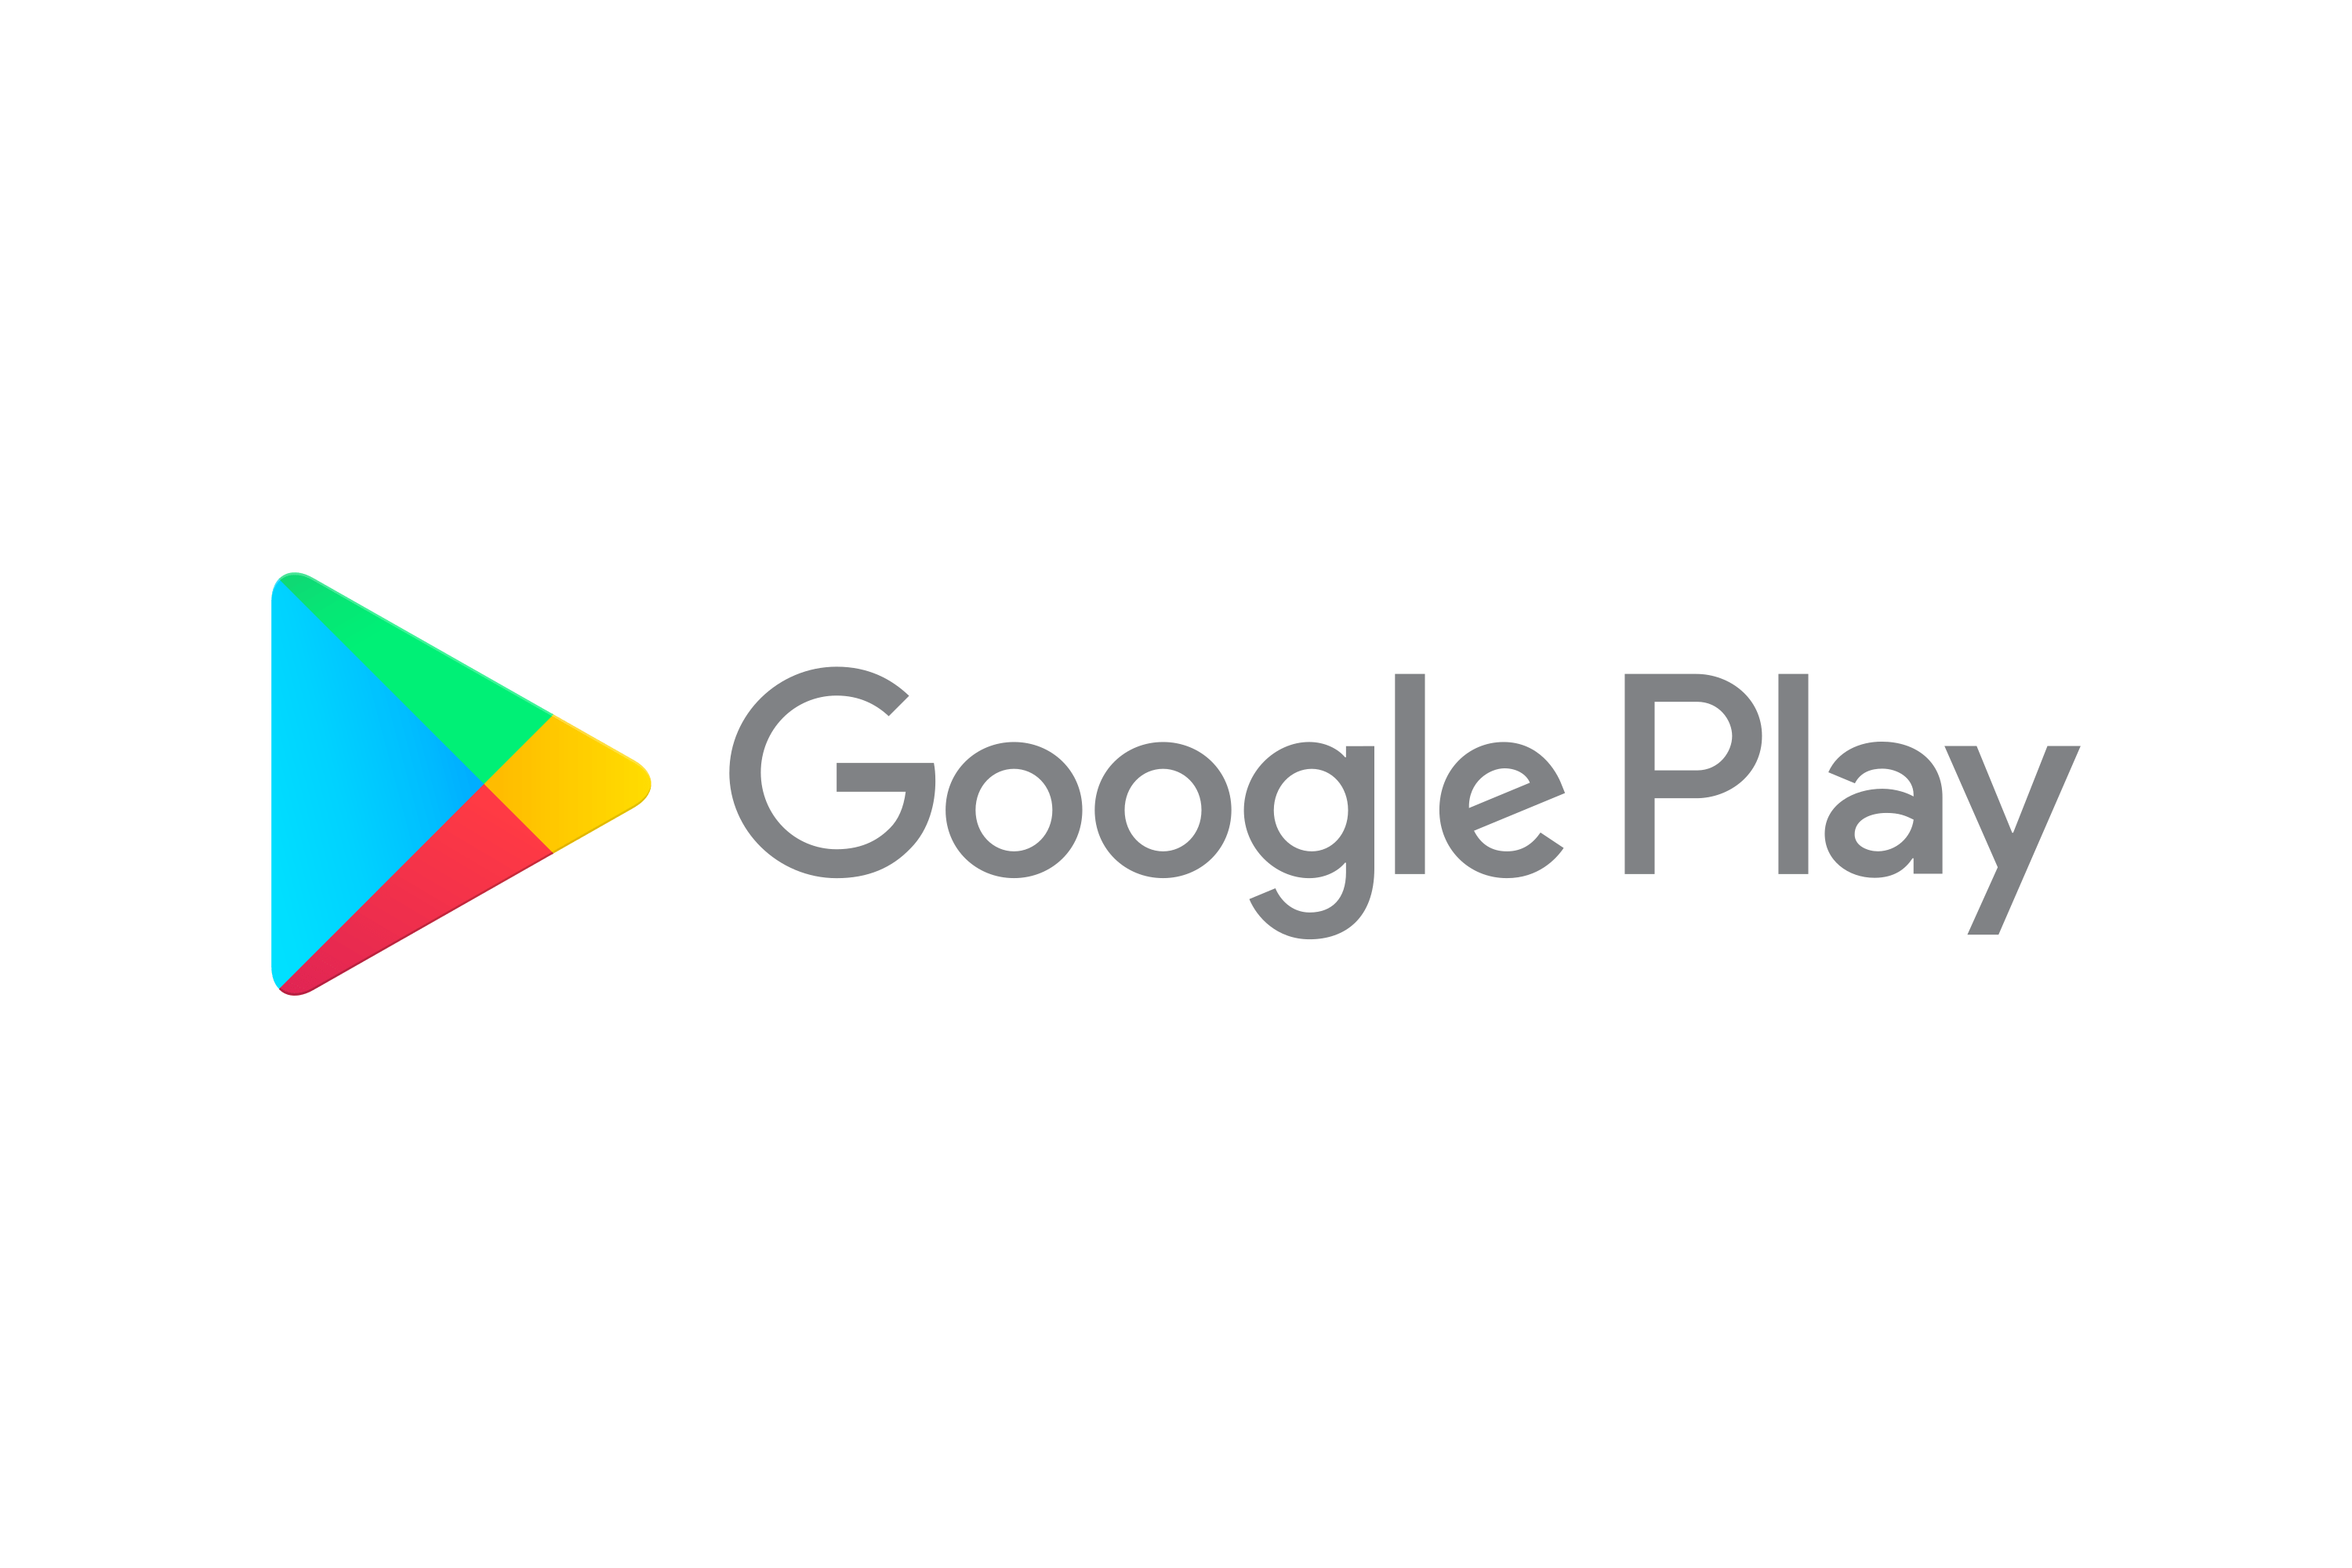 Google Play Logo - Free download logo in SVG or PNG format